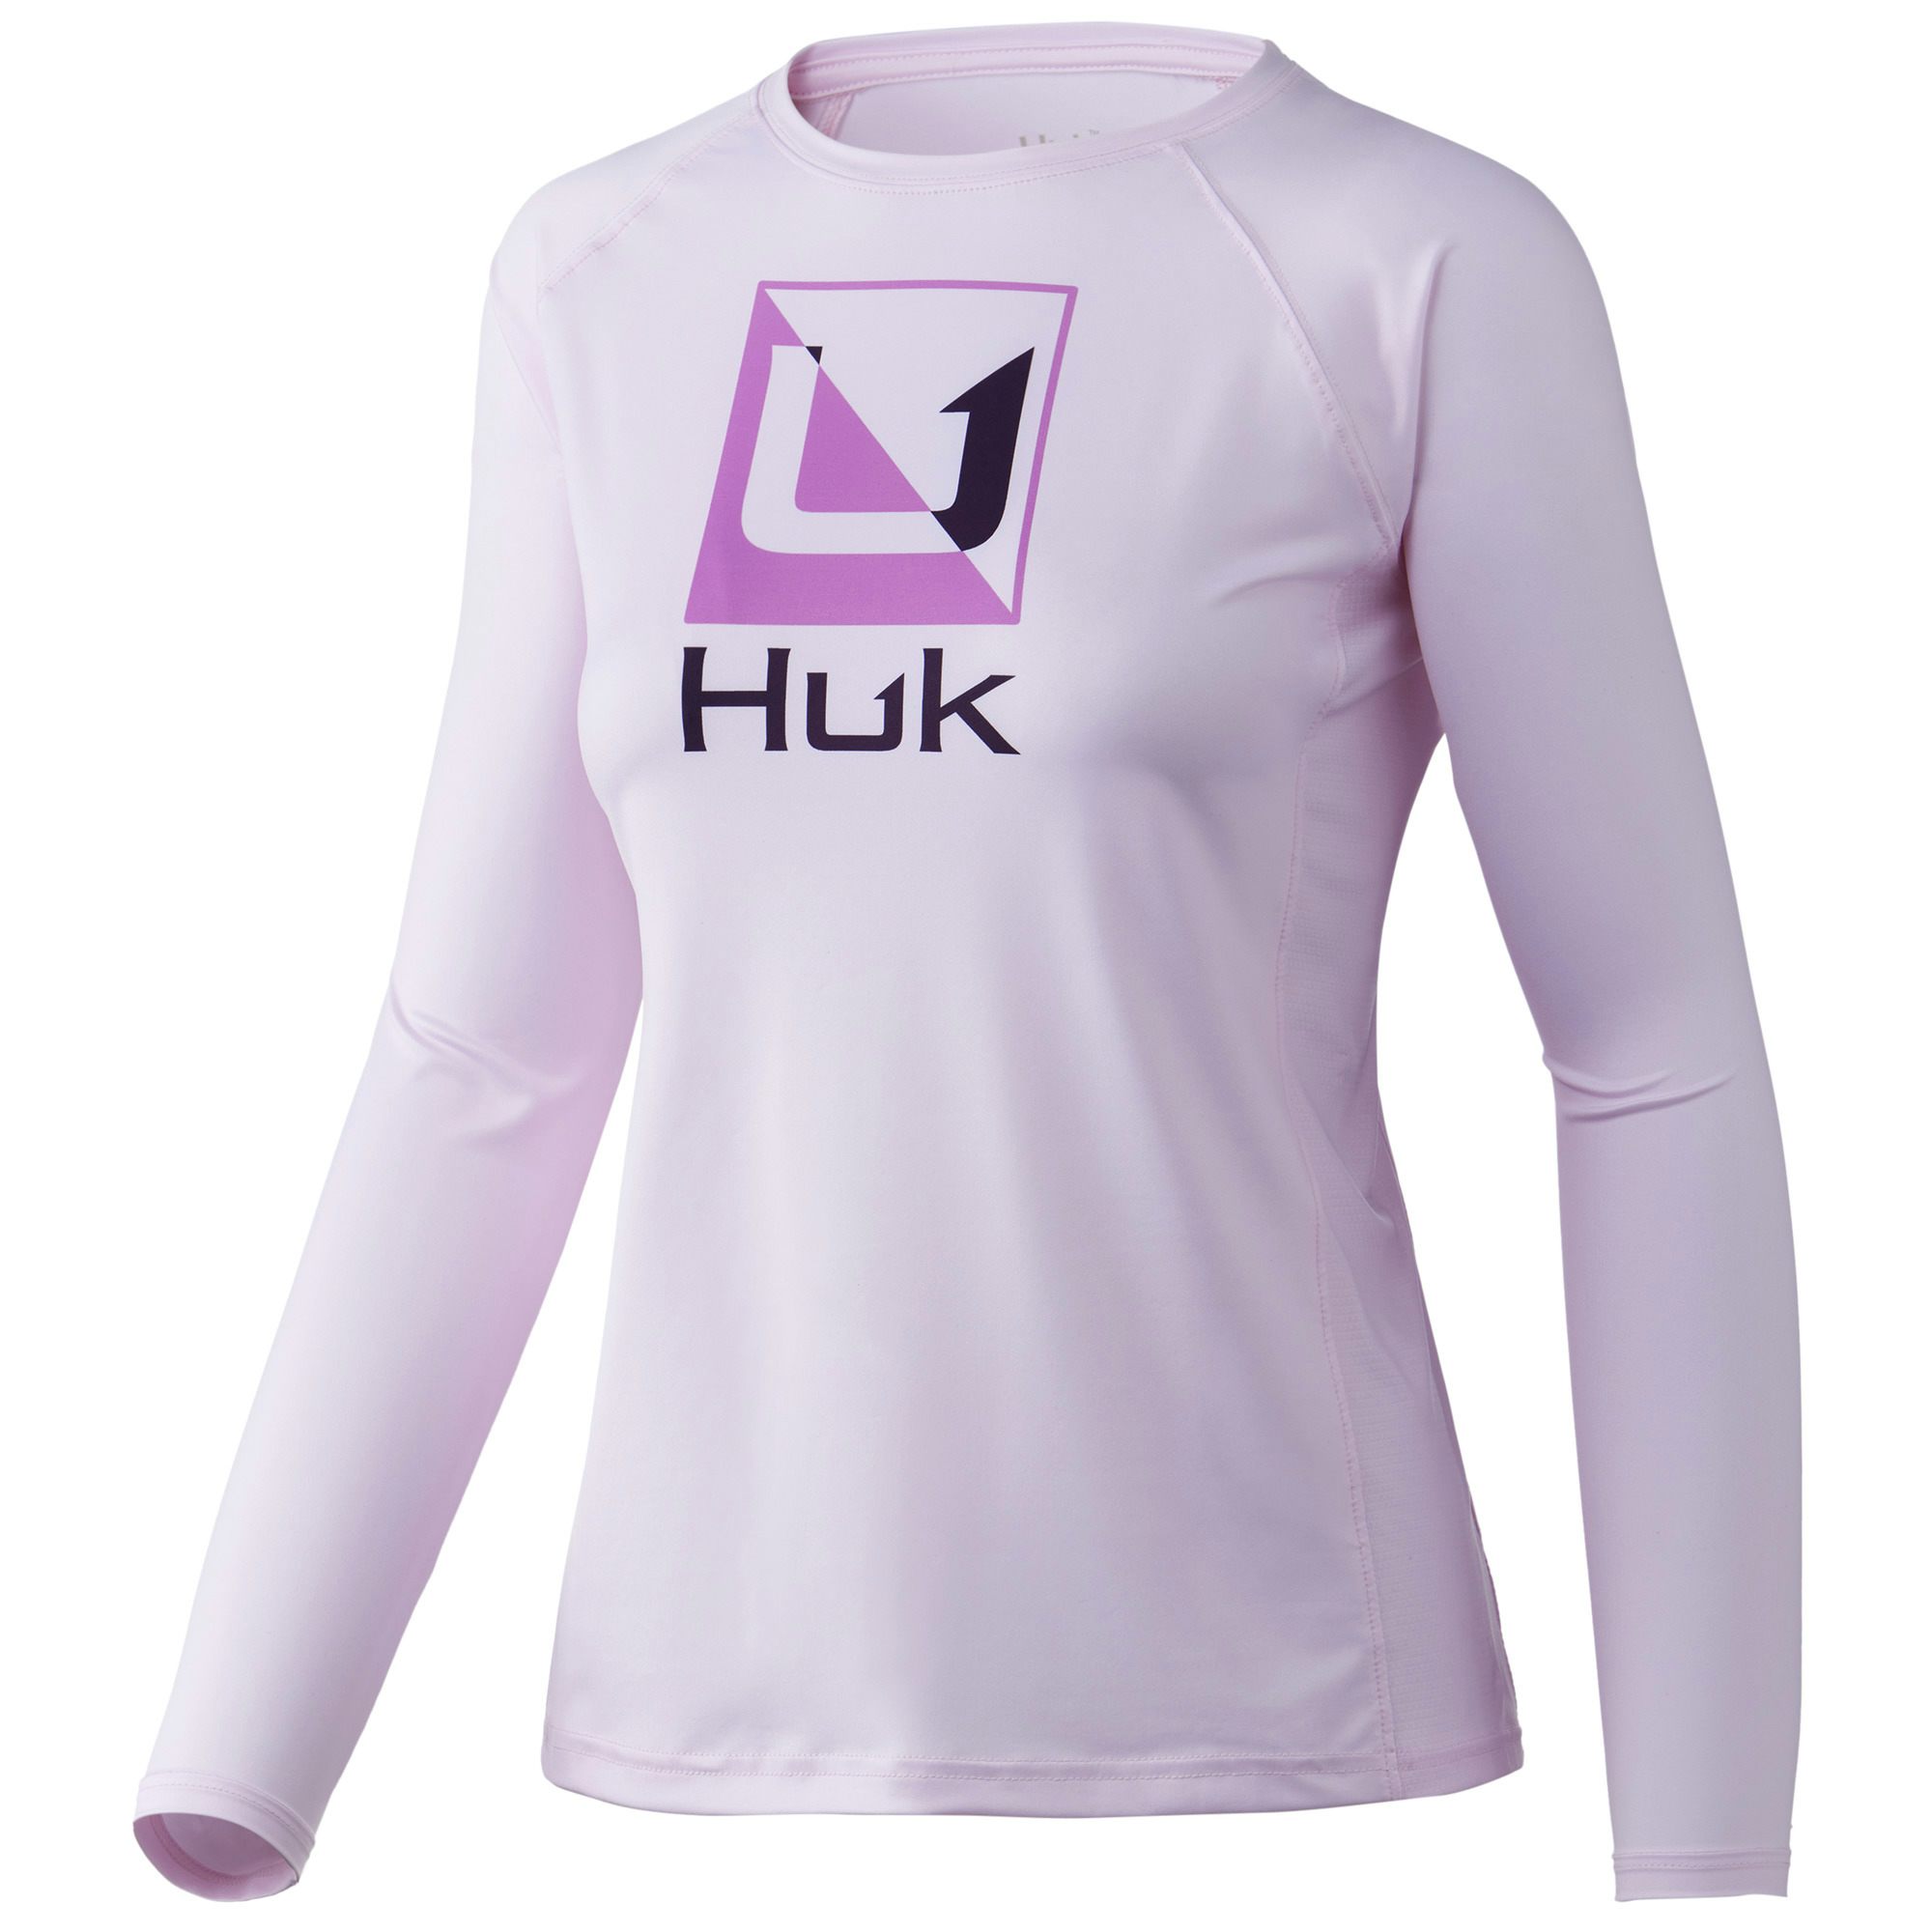 Huk Reflection Pursuit Long Sleeve Performance Shirt (Women's)